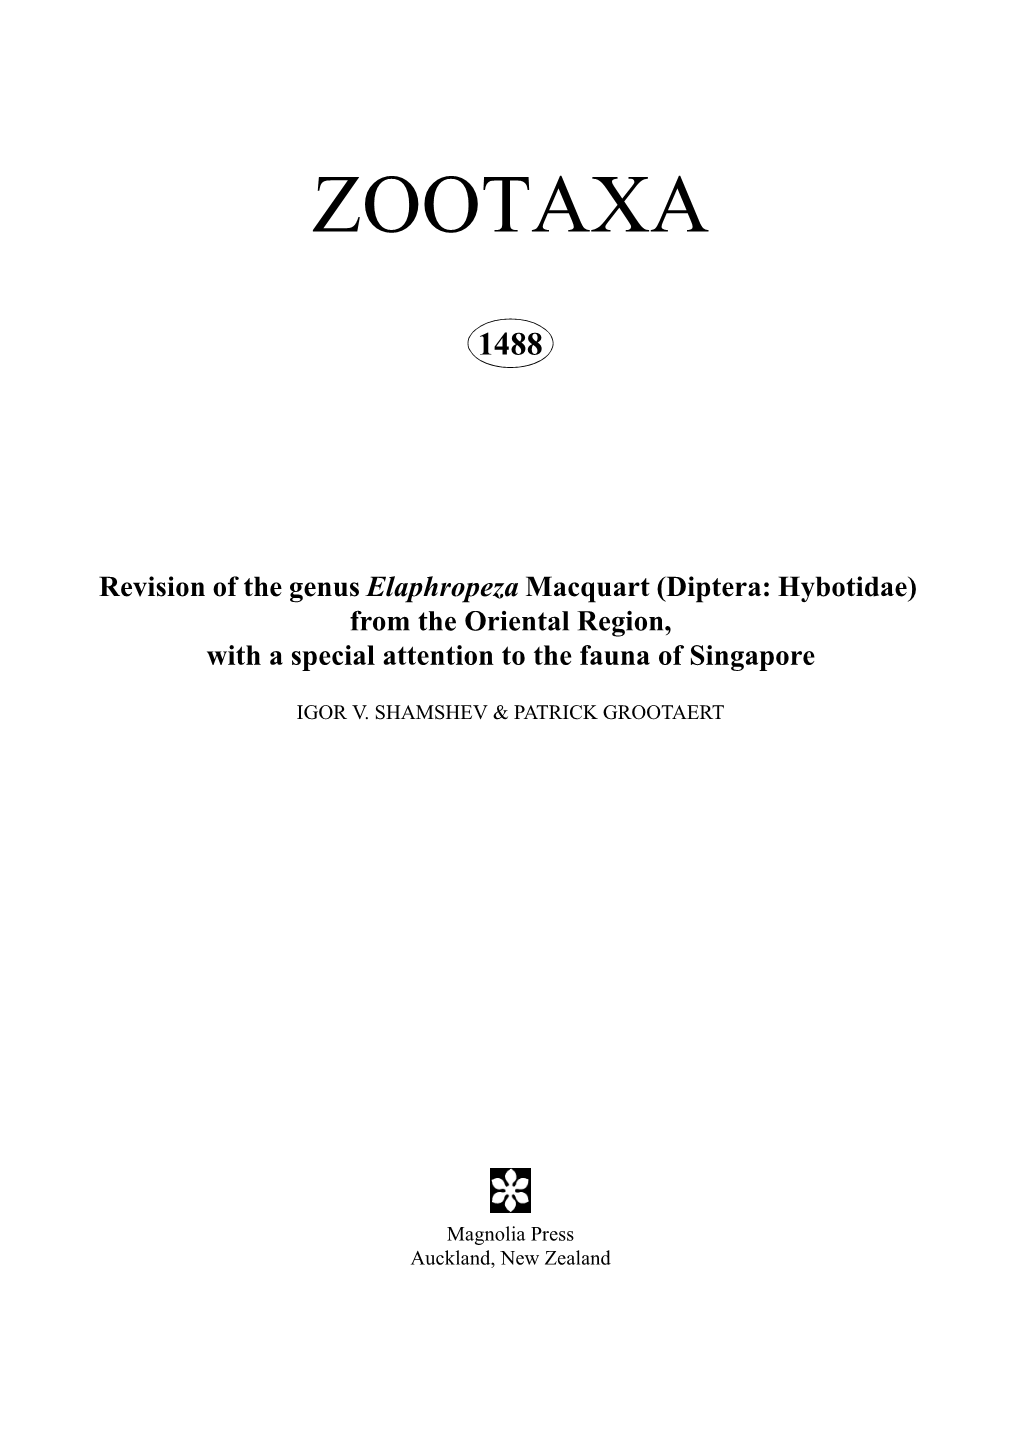 Zootaxa, Revision of the Genus Elaphropeza Macquart (Diptera